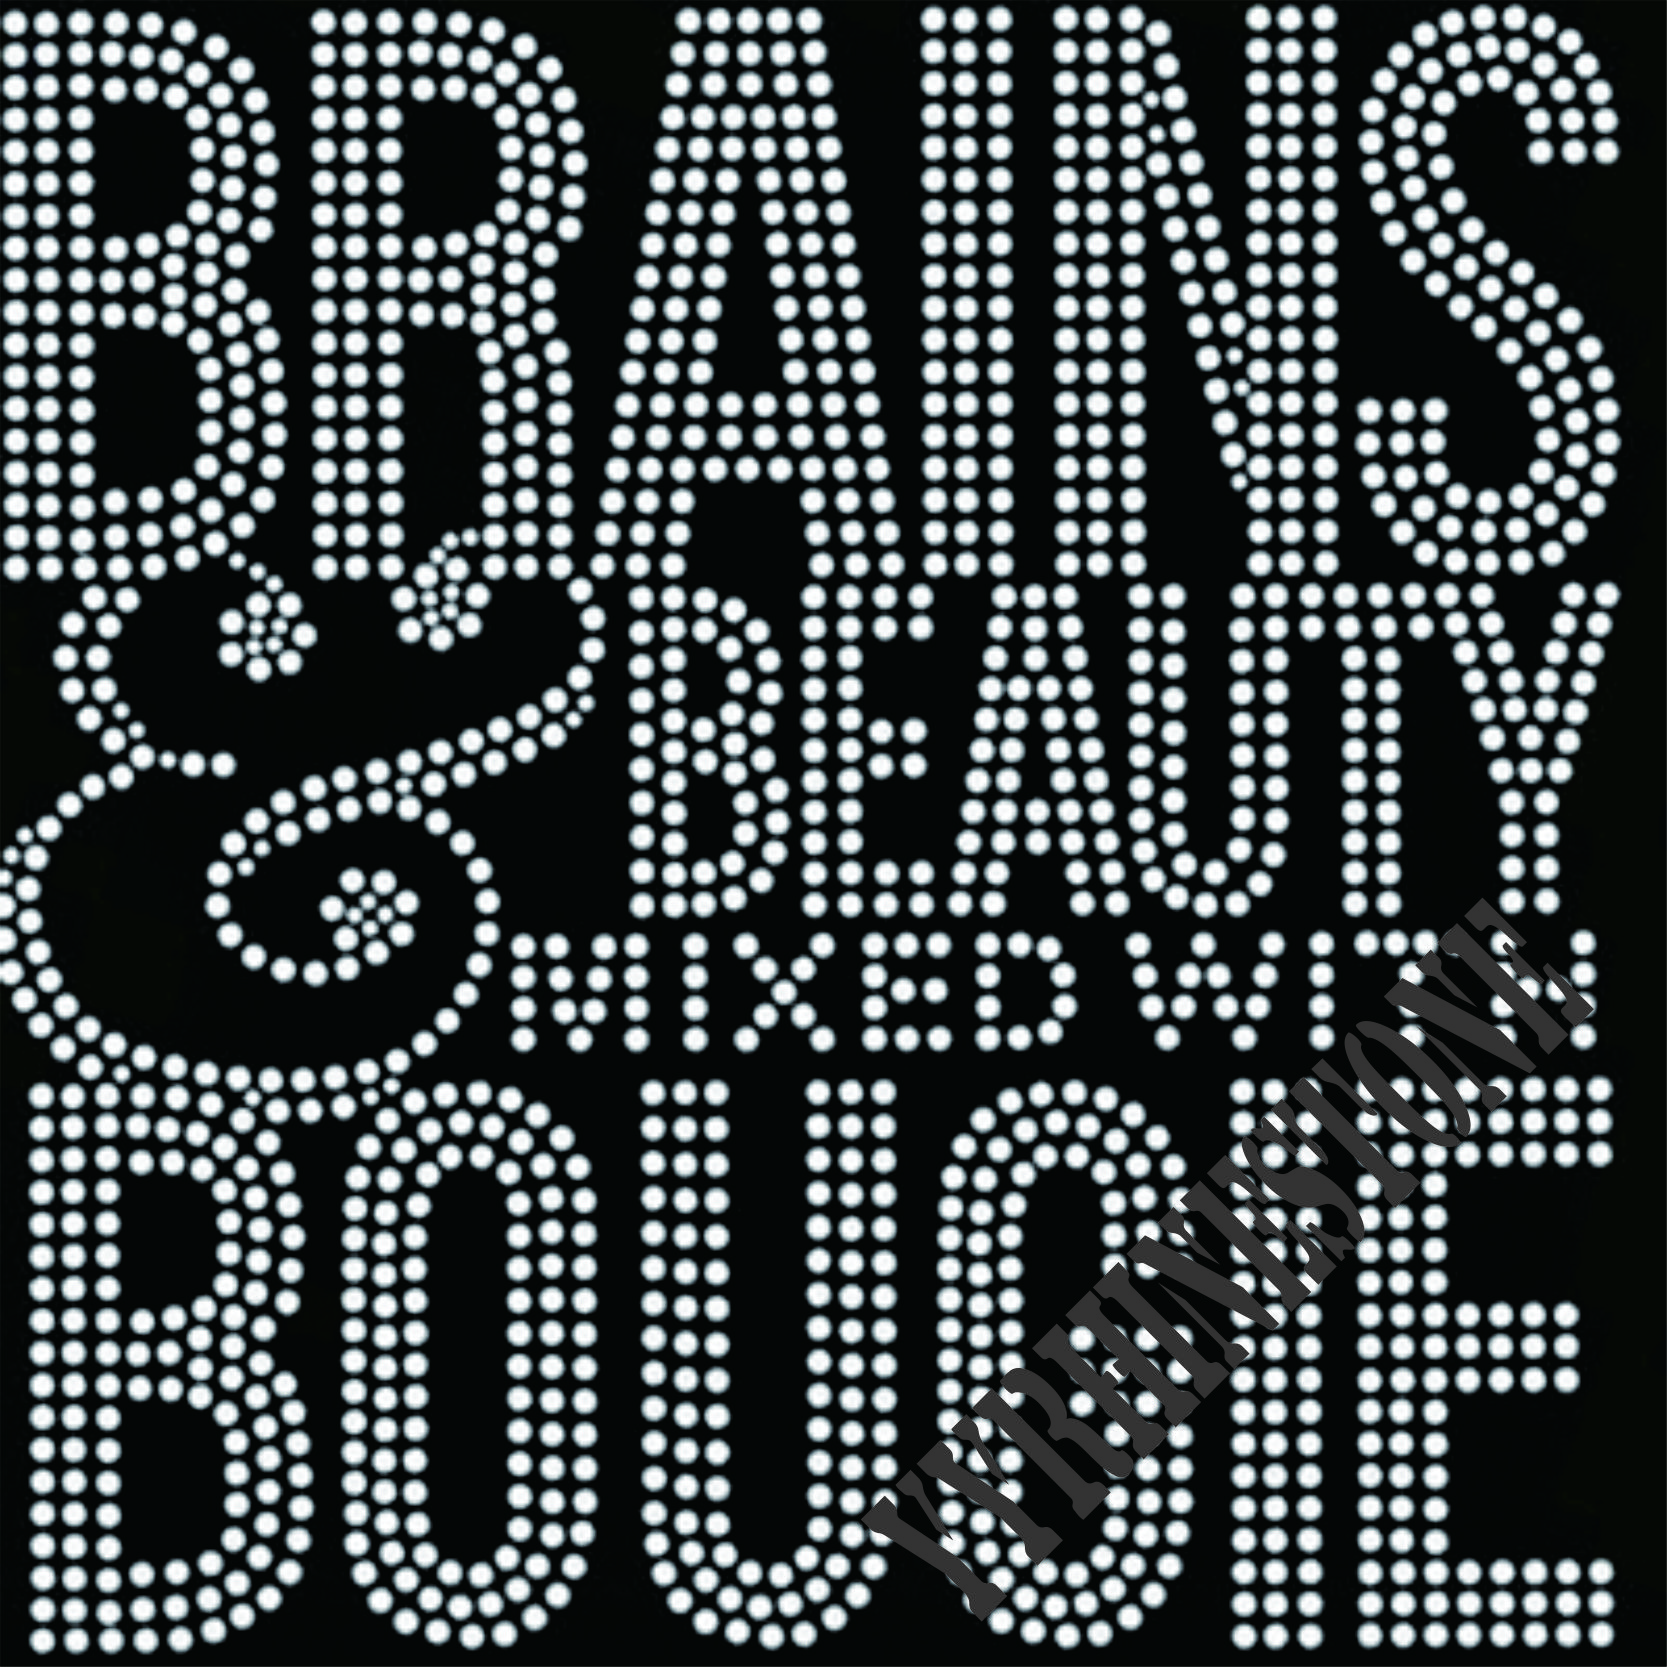 brains beauty mixed with bougie hotfix rhinestone transfer